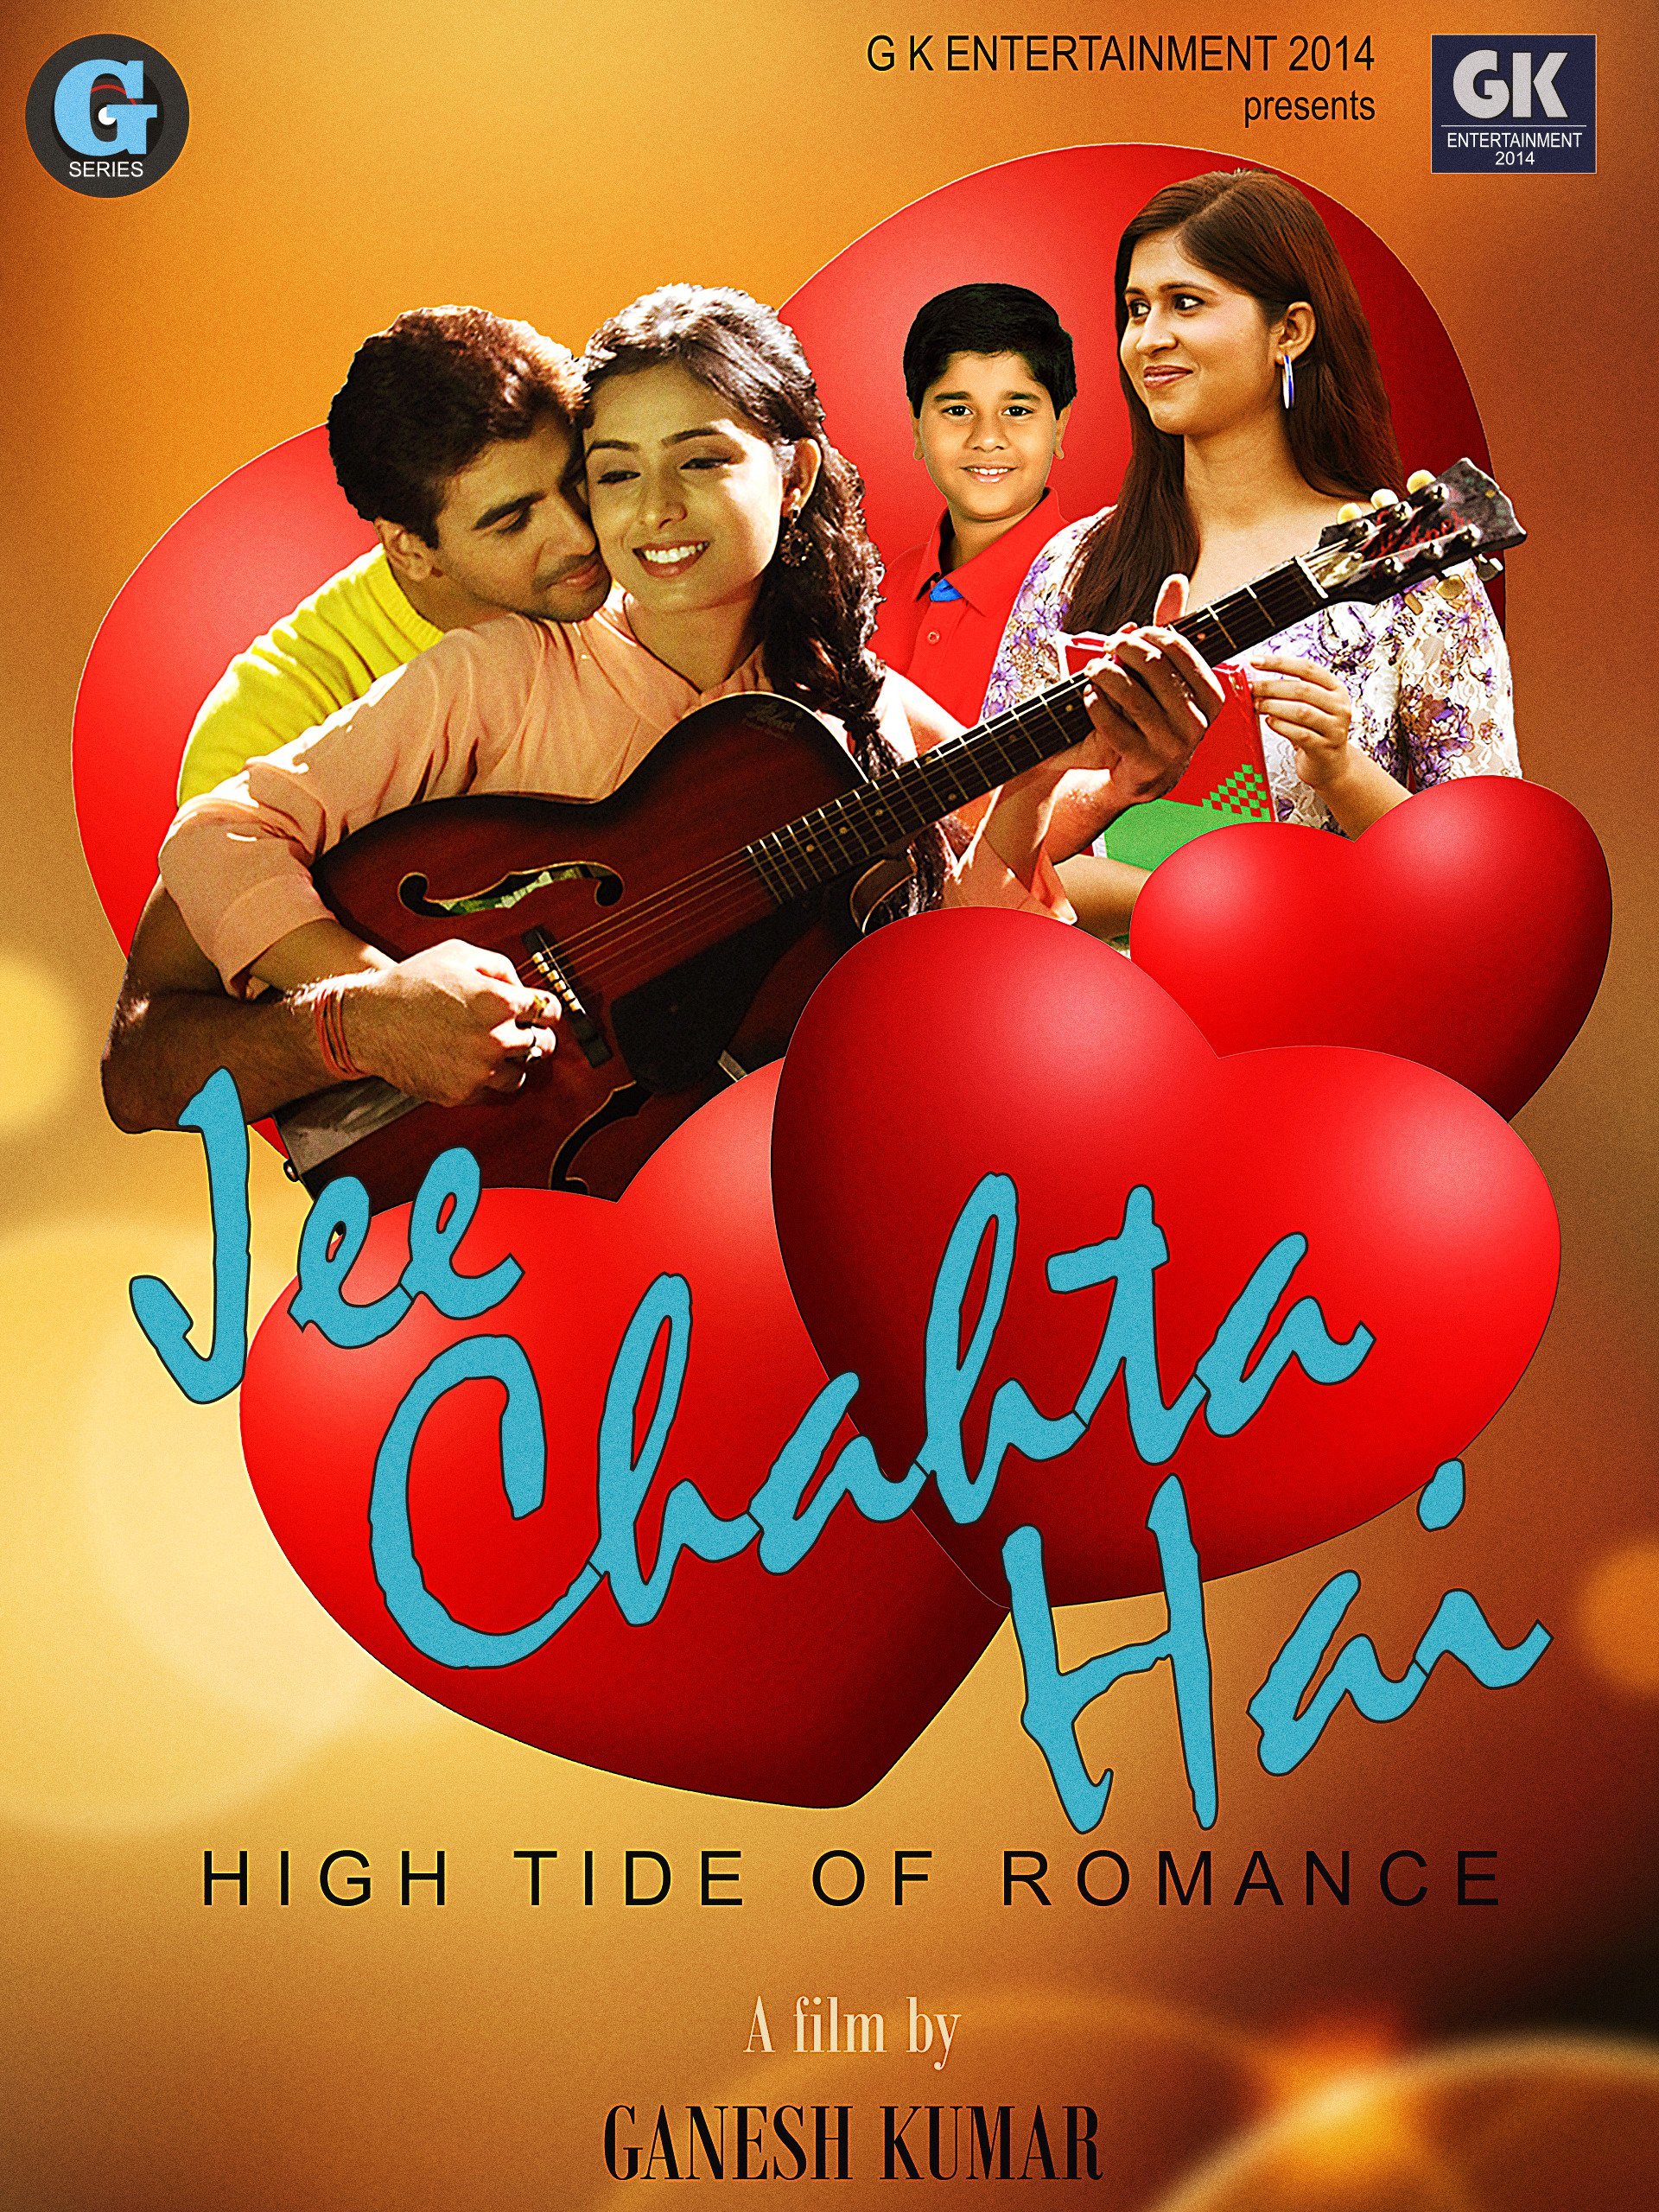 Download Jee Chahta Hai High Tide Of Romance 2015 Hindi Movie 480p HDRip 300MB